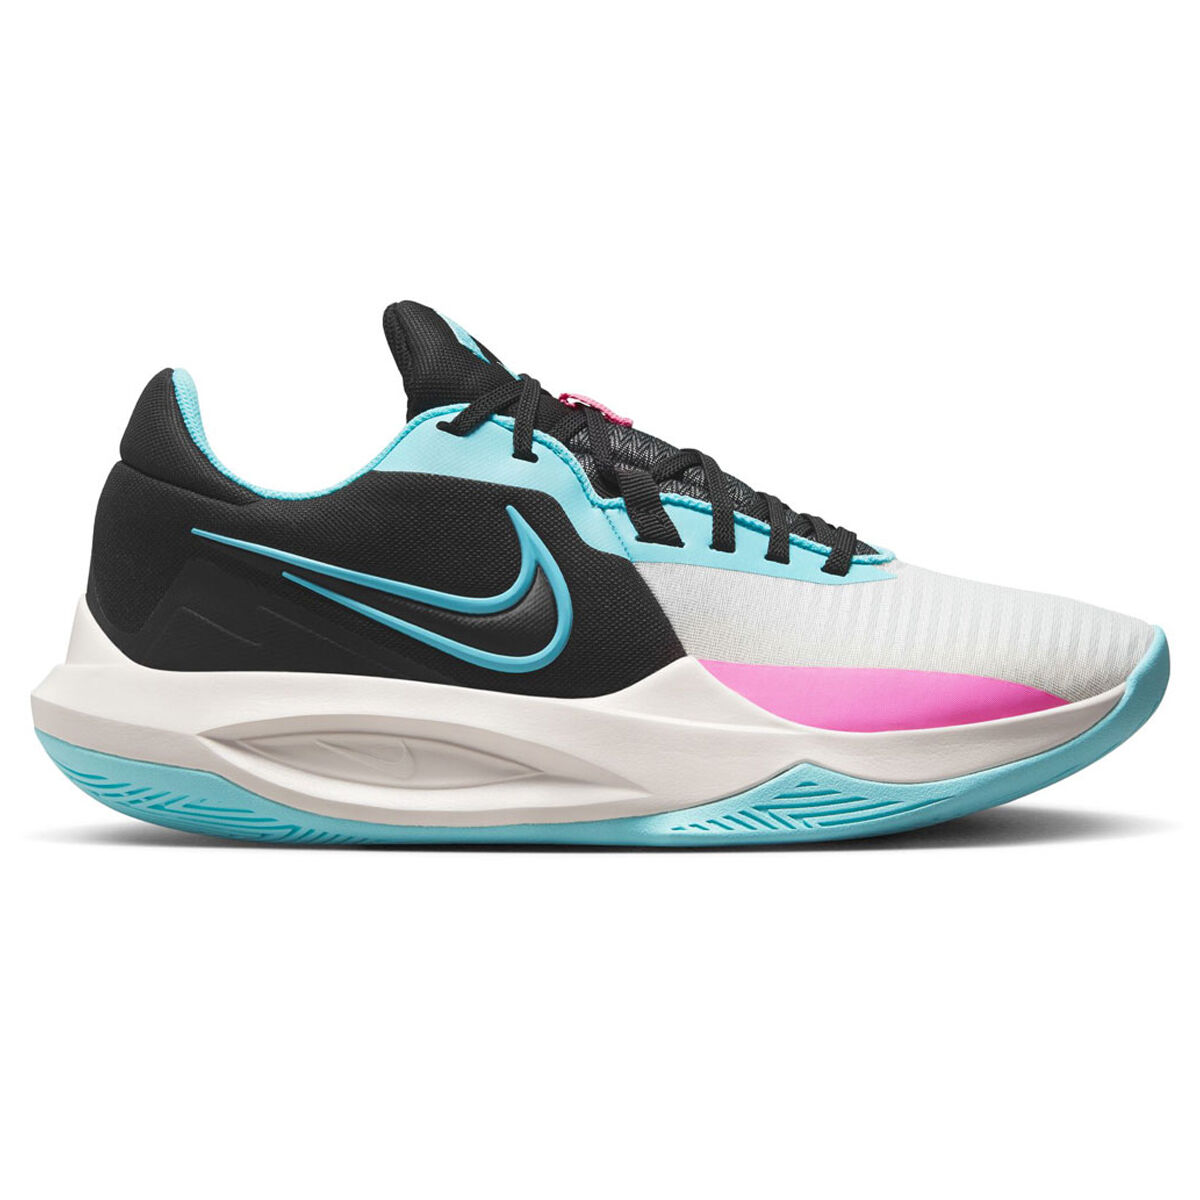 Womens Blue Basketball Shoes. Nike.com